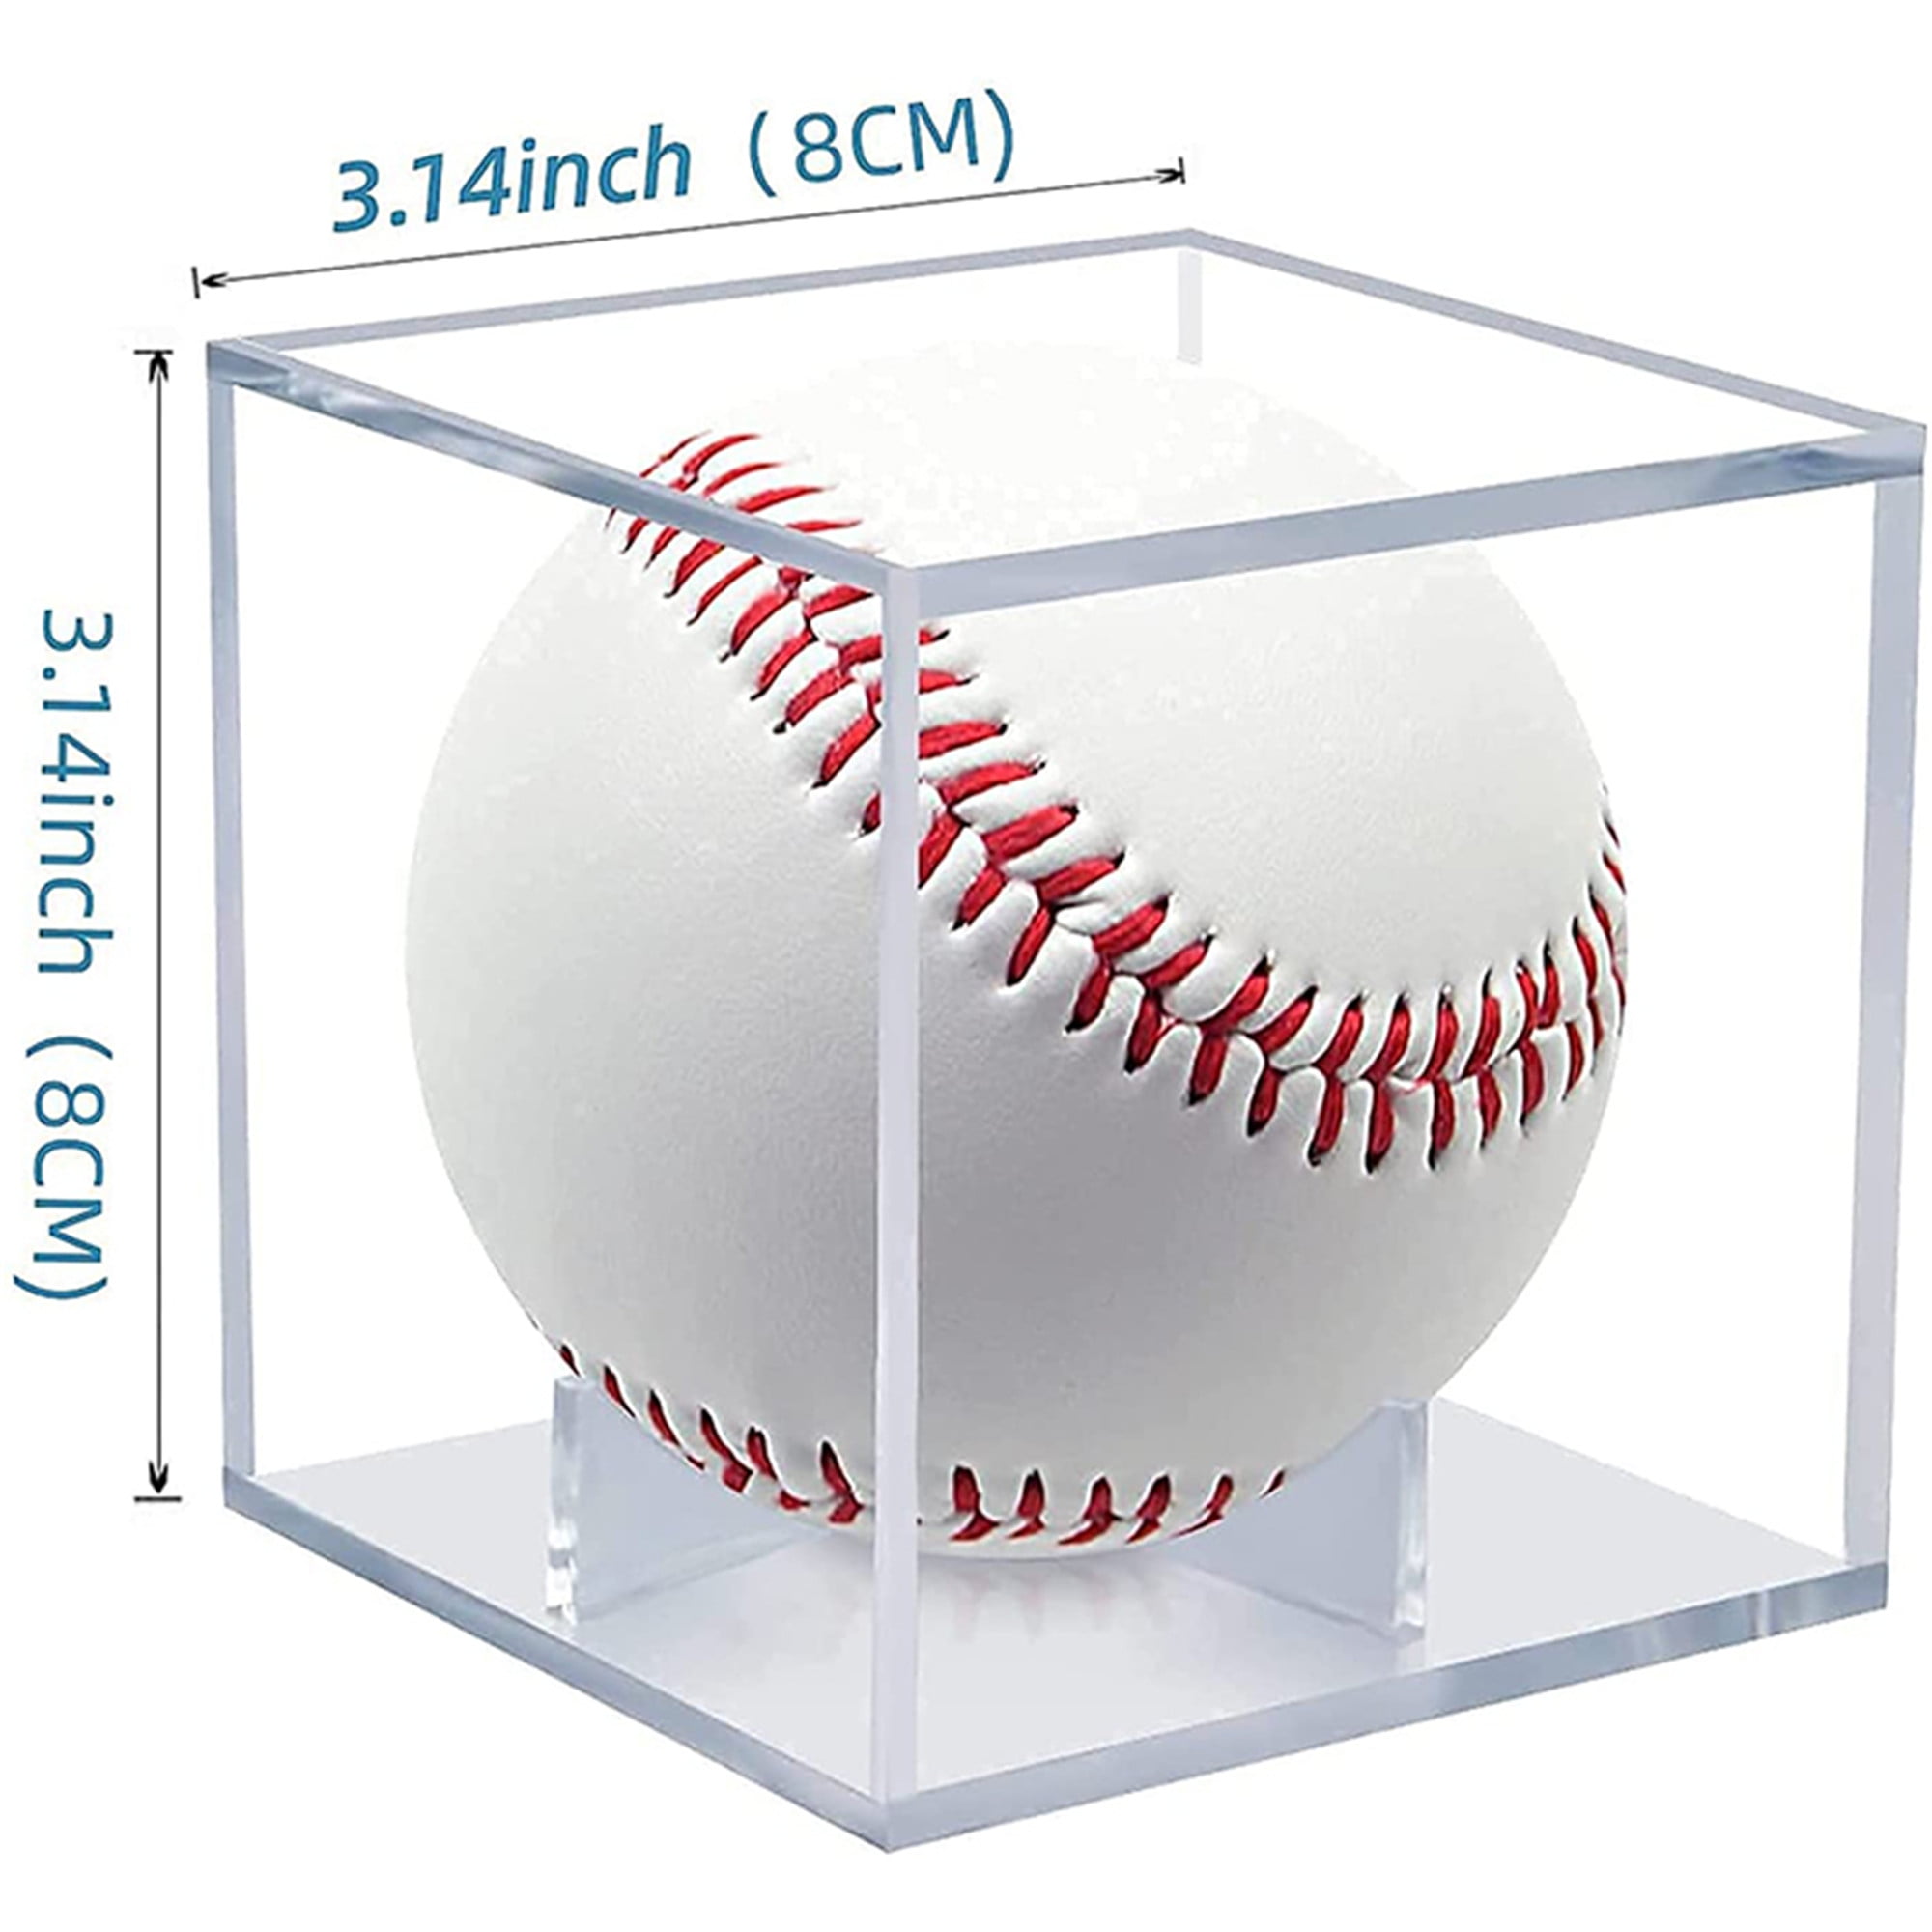 8x8x8cm Clear Acrylic Baseball or Cricket Ball Display Storage Box Case Holder 